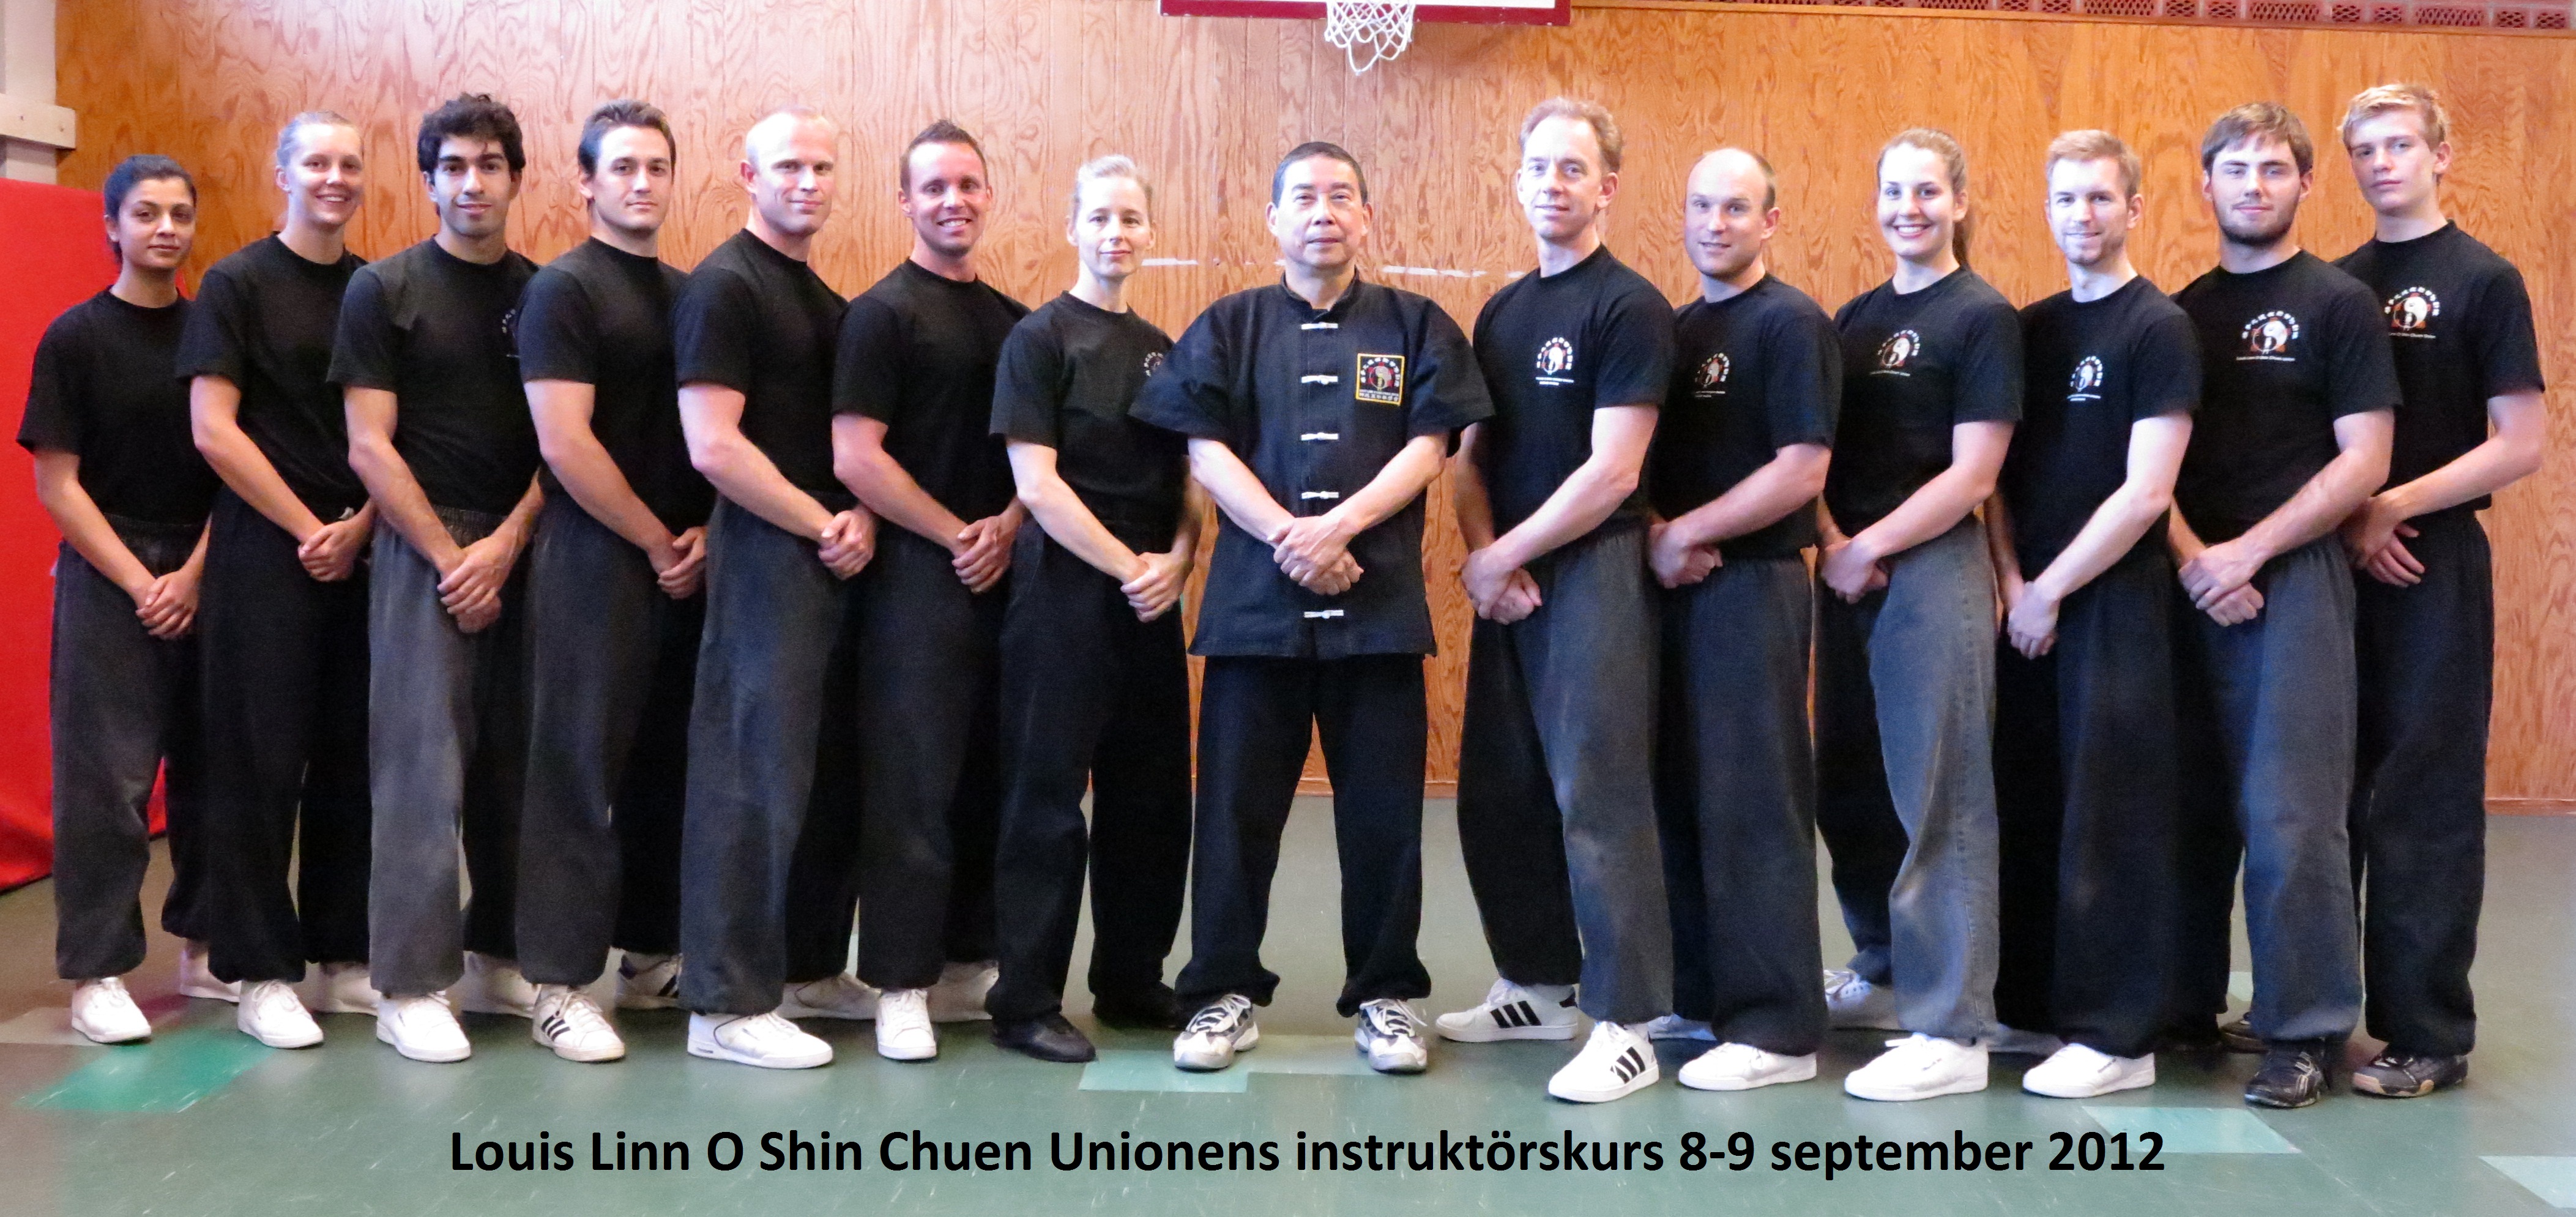 The instructor group of Louis Linn O Shin Chuen Union autumn 2012